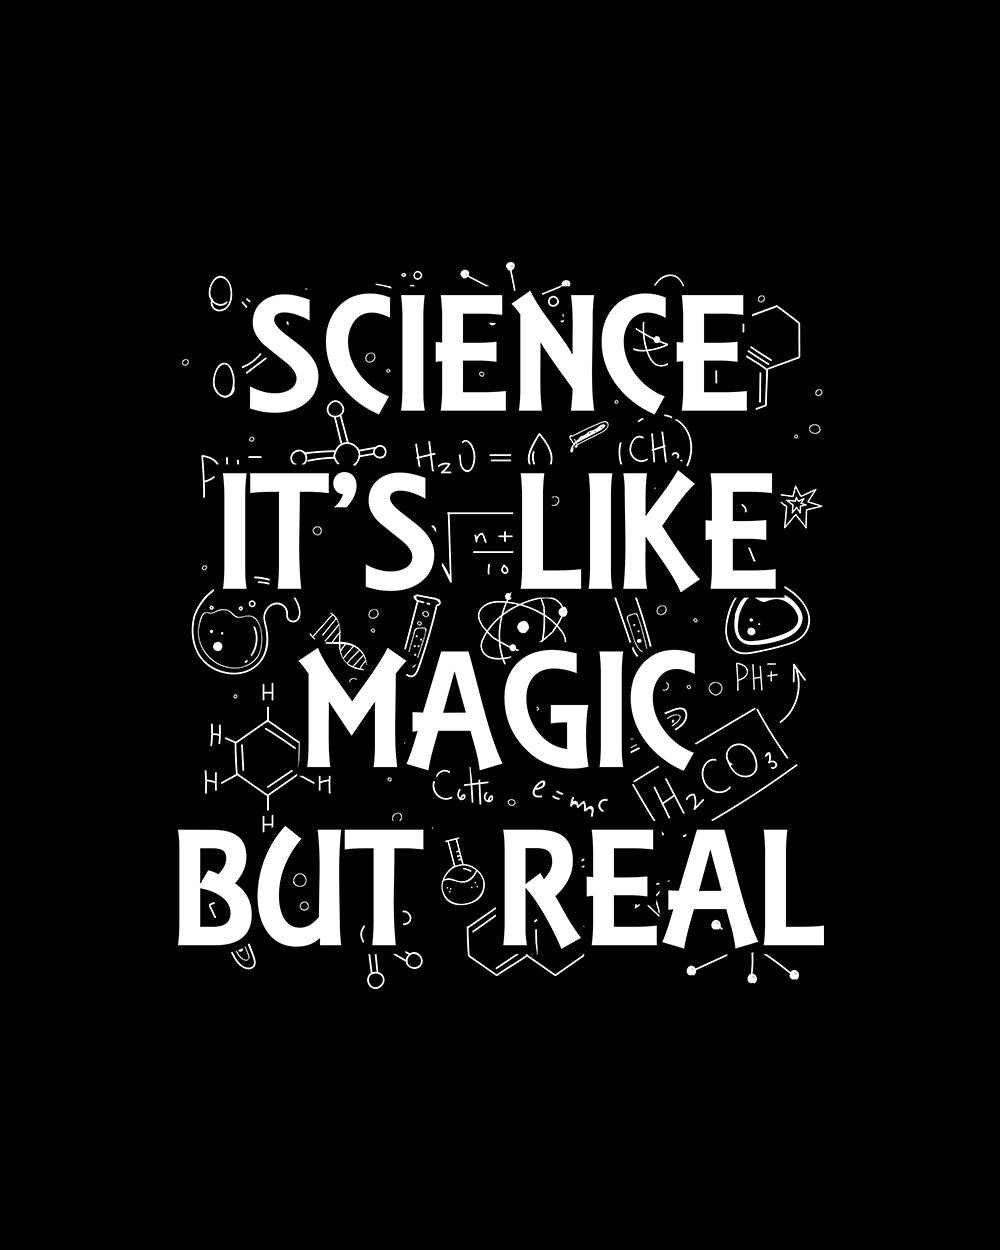 Science It's Like Magic Hoodie Australia Online #colour_black